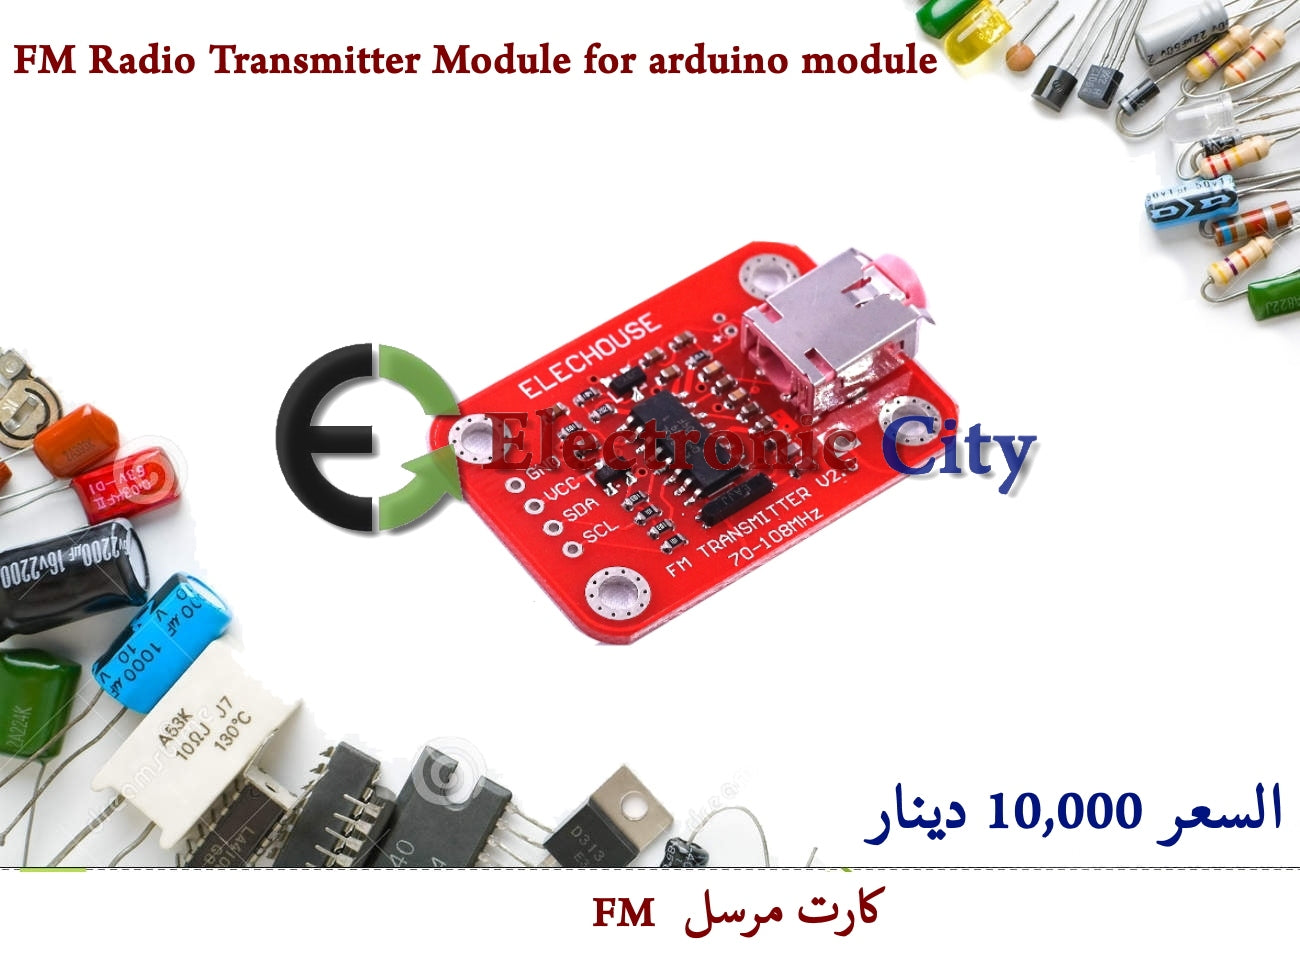 FM Radio Transmitter Module for arduino module #S7 011126